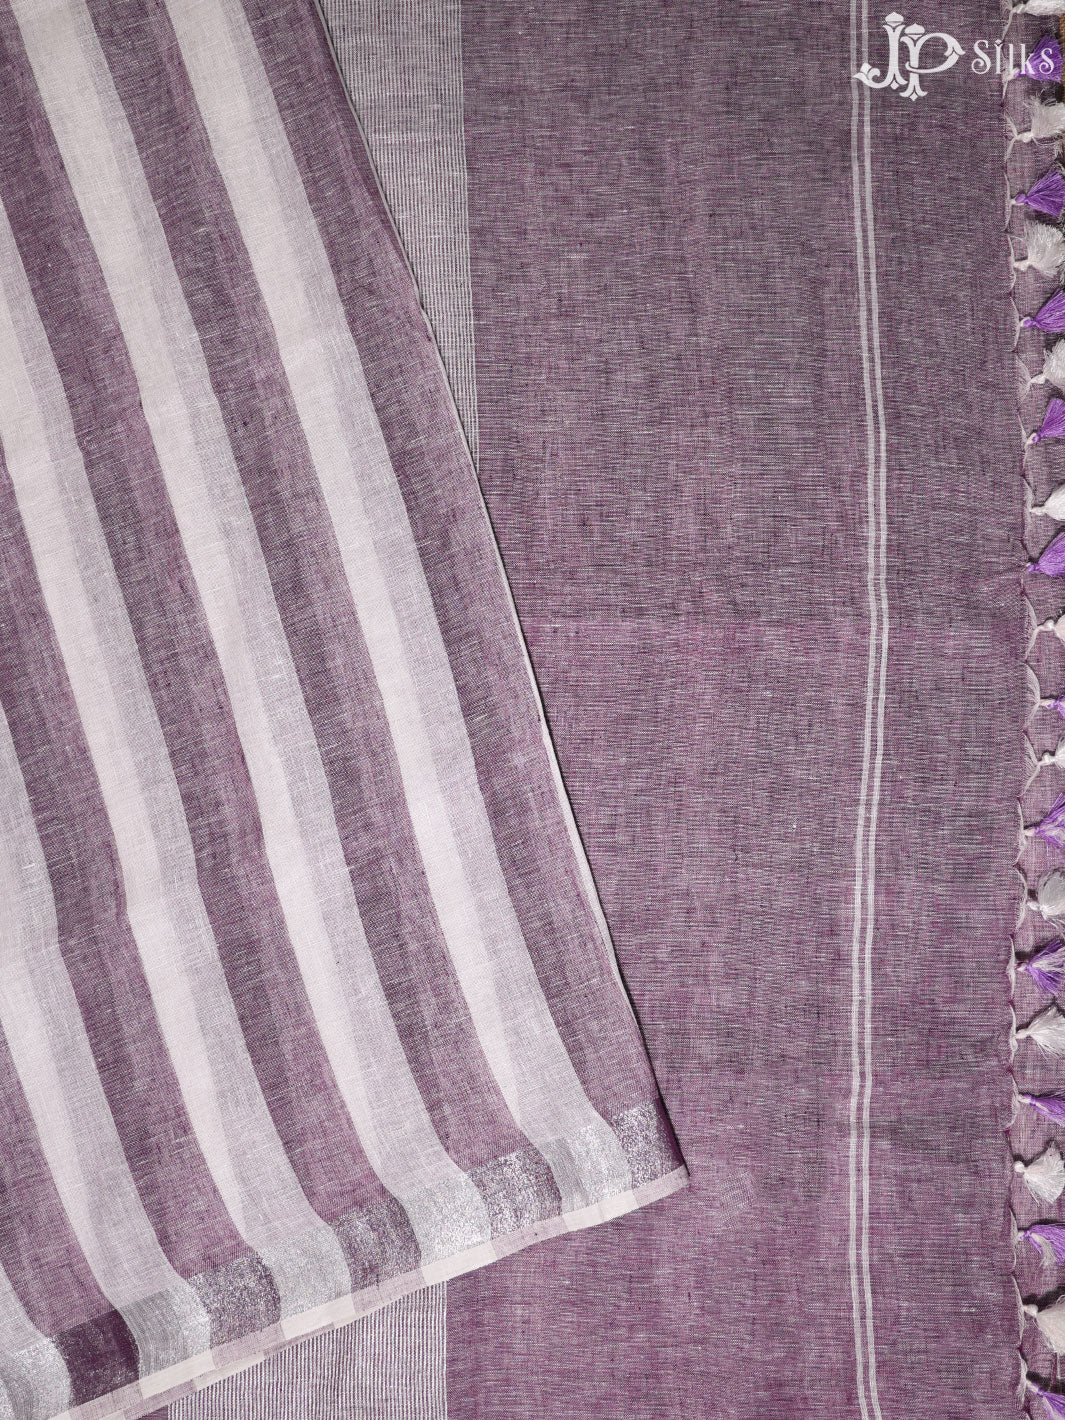 White and Purple Linen Fancy Saree - E4557 - View 1